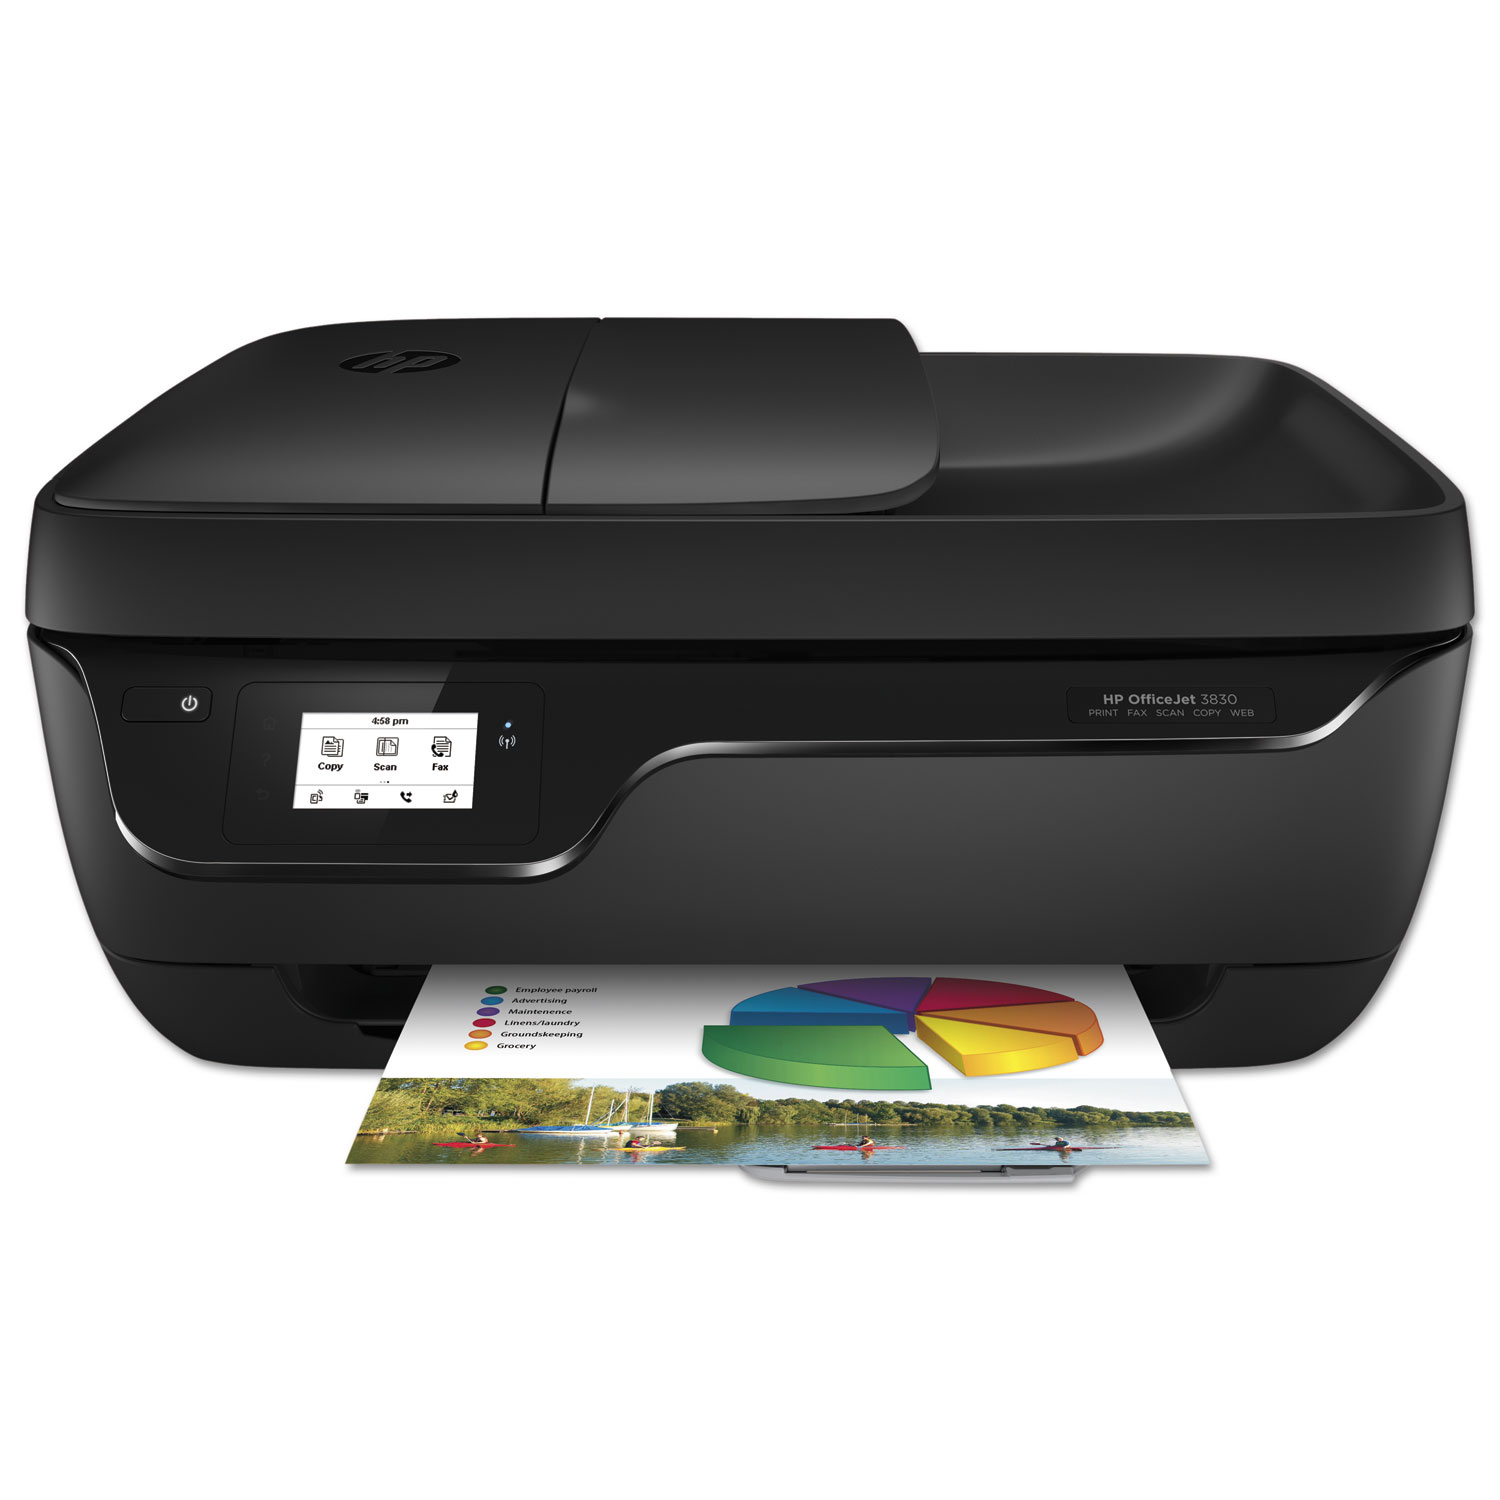 Officejet 3830 Copy/Fax/Print/Scan - ASE